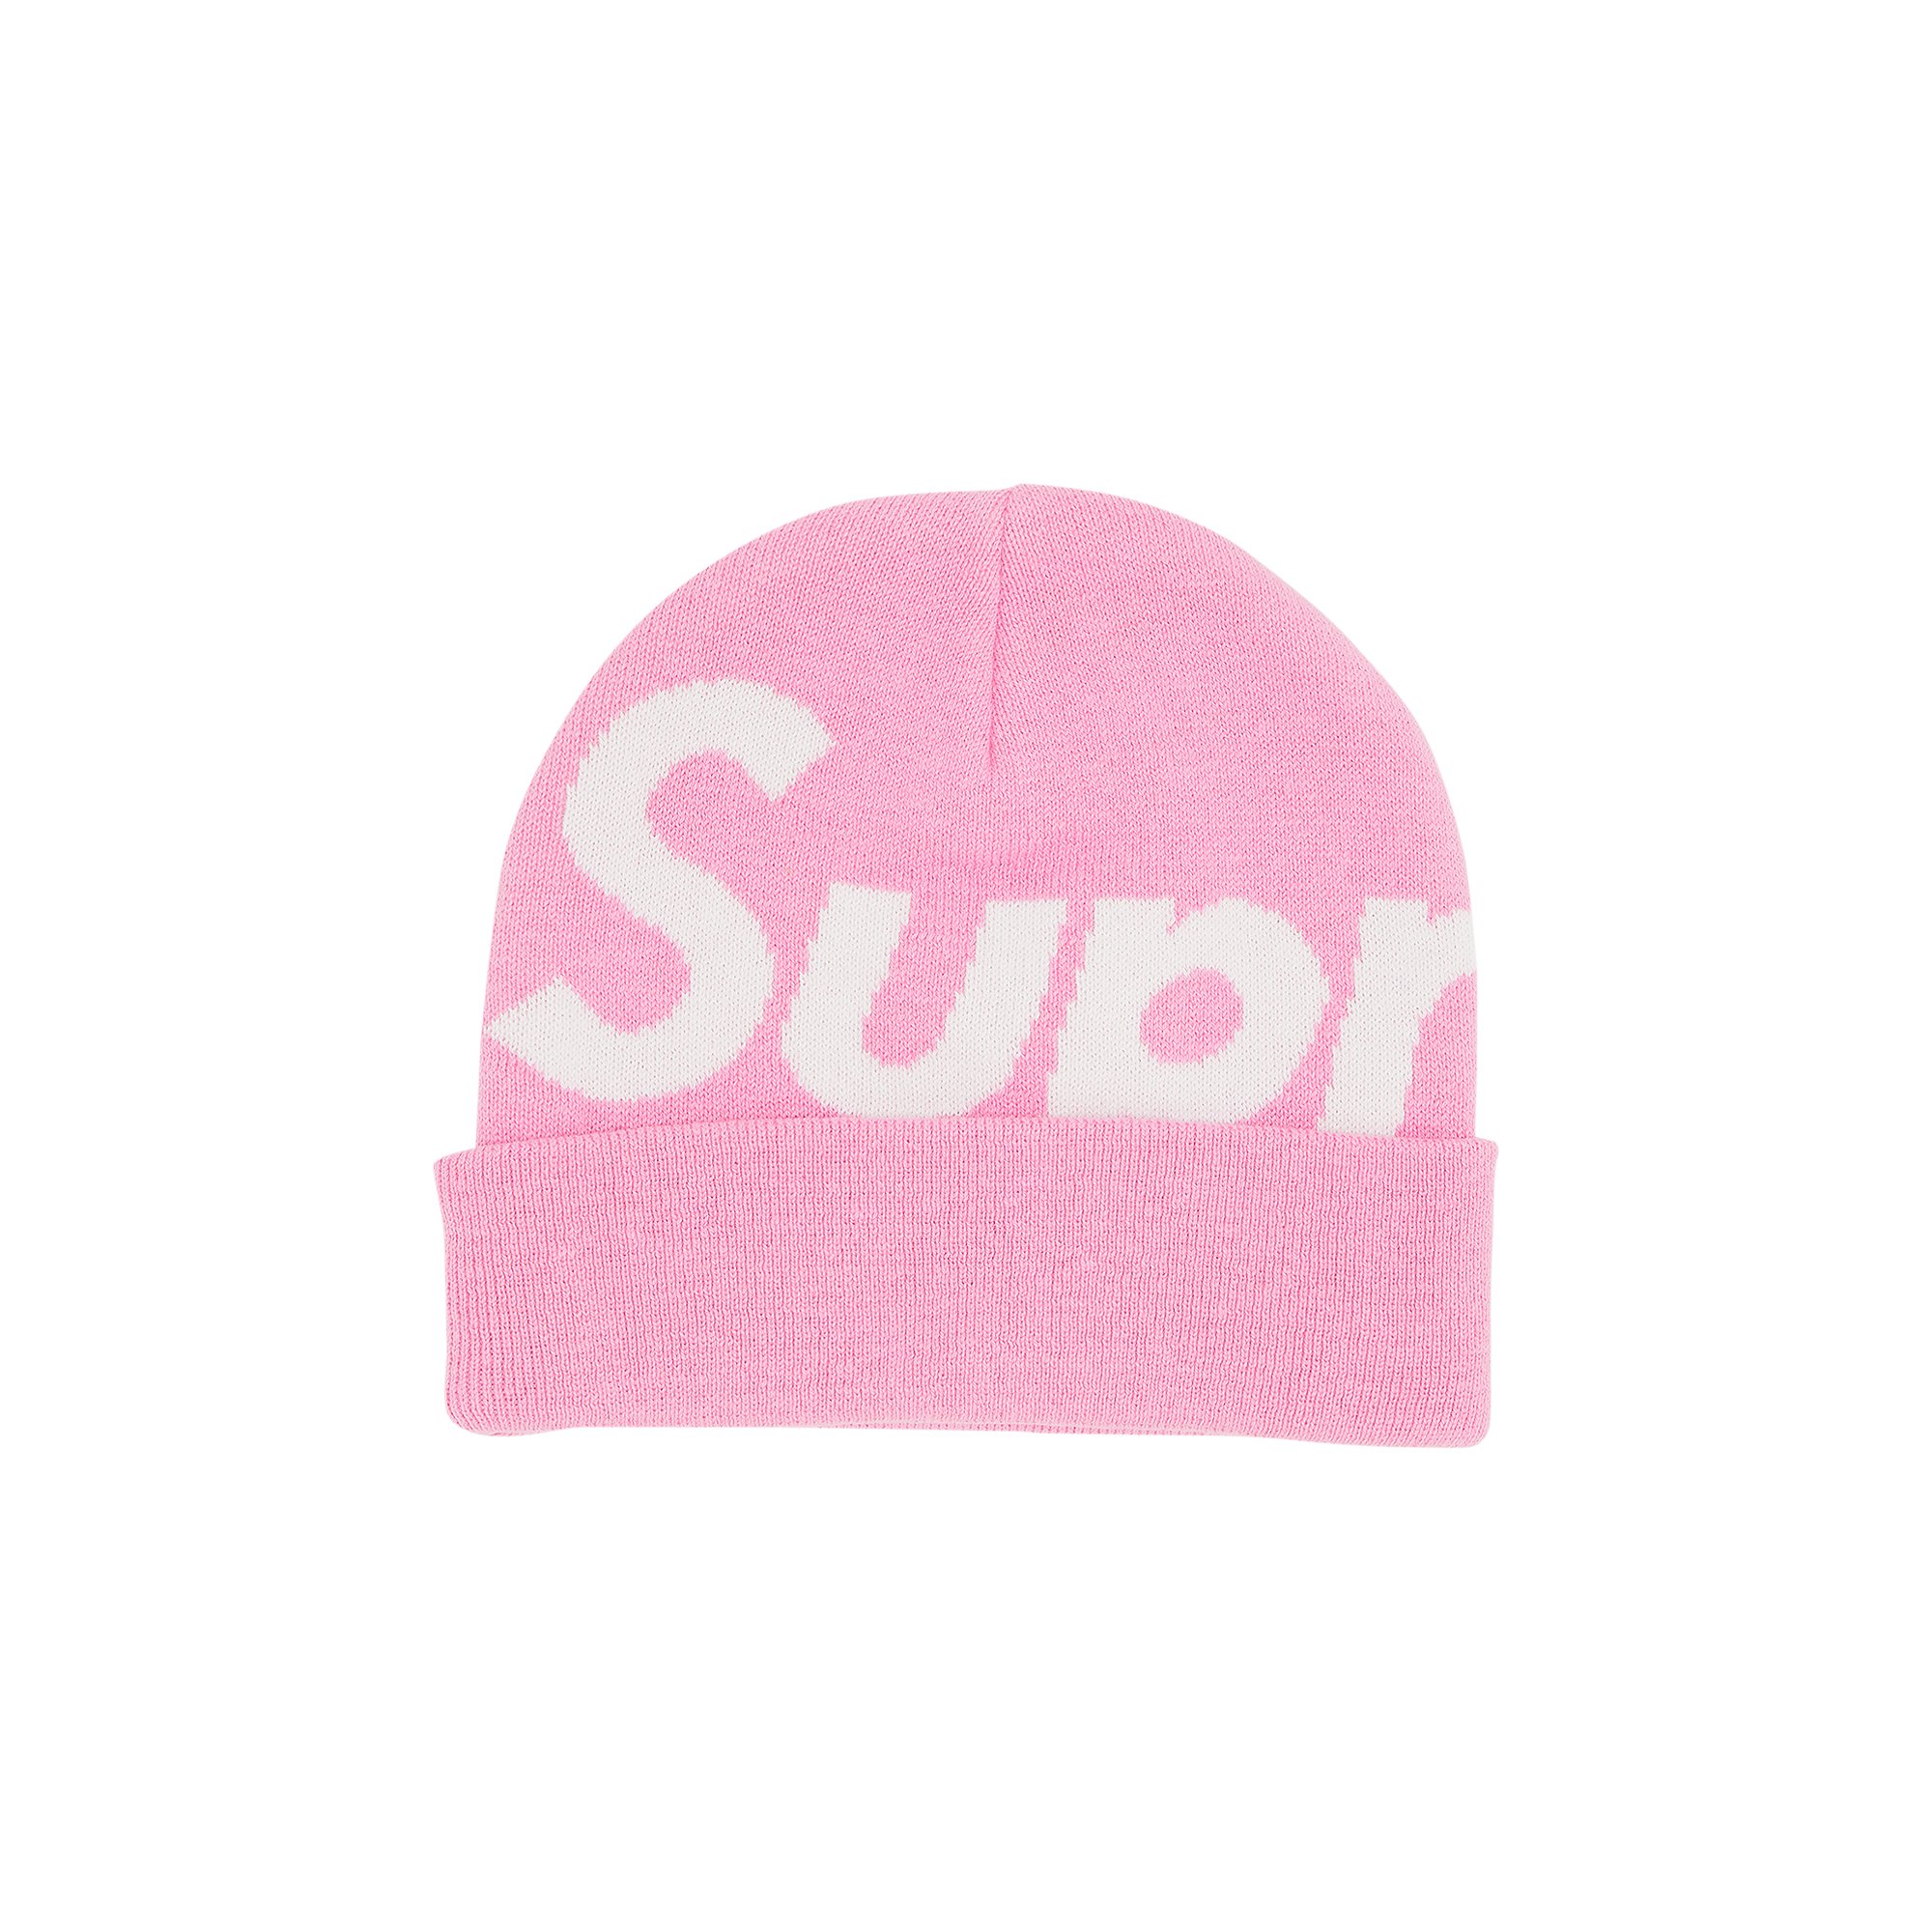 Шапка-бини Supreme с большим логотипом, розовая